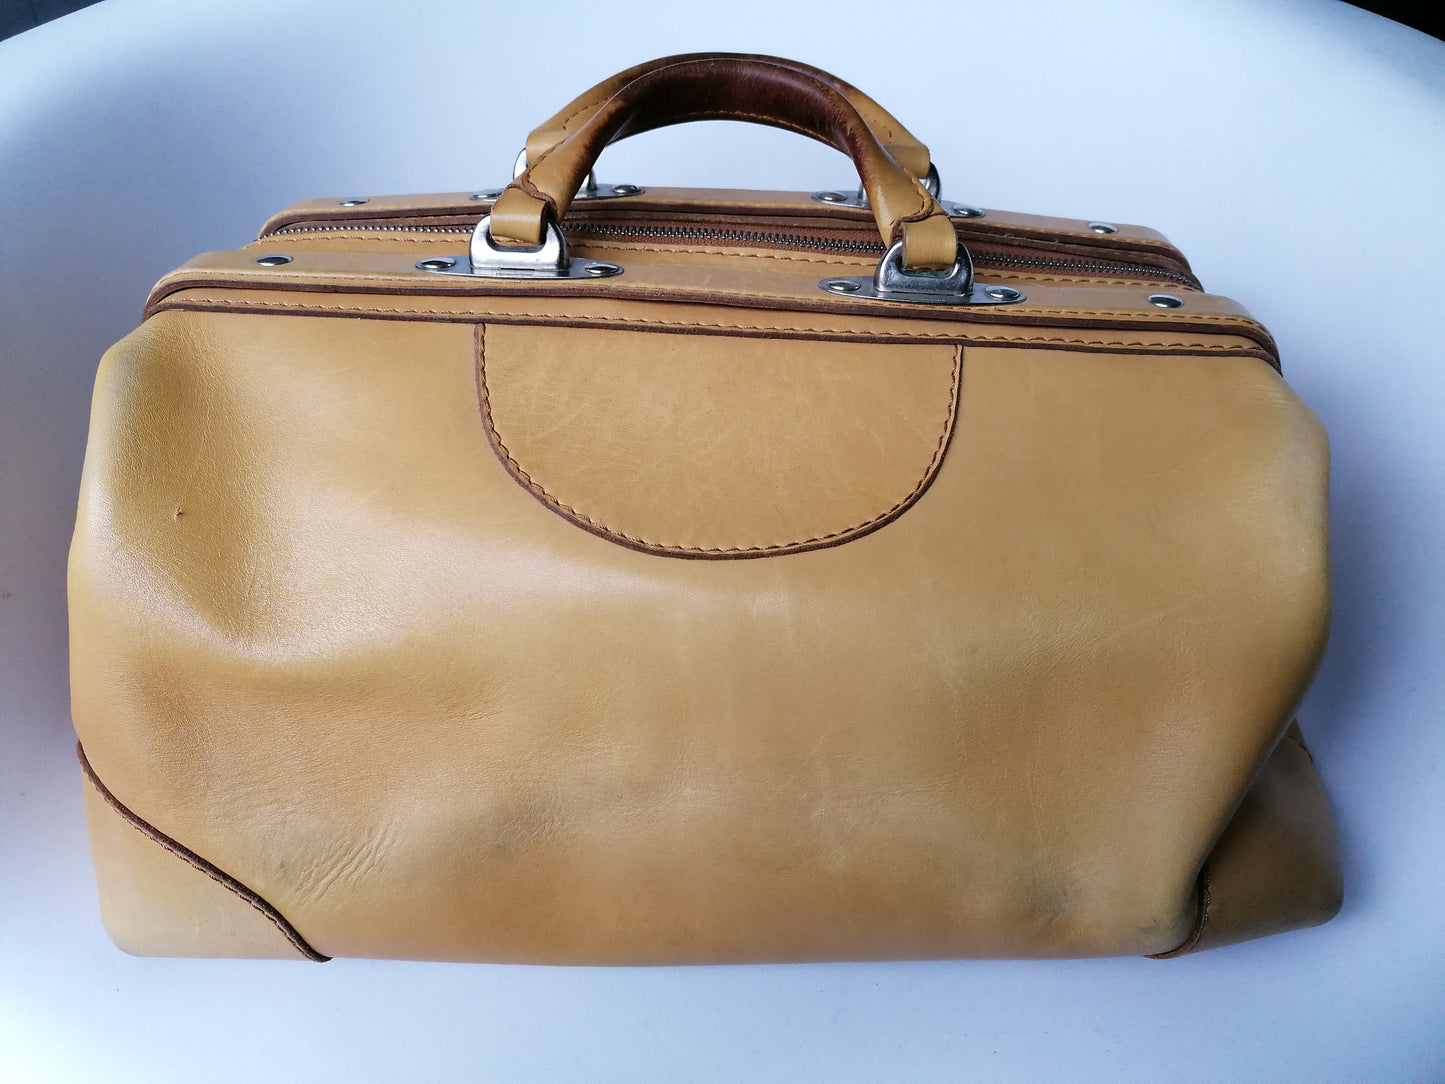 Tramontano Napoli leather bag. Light brown colored.